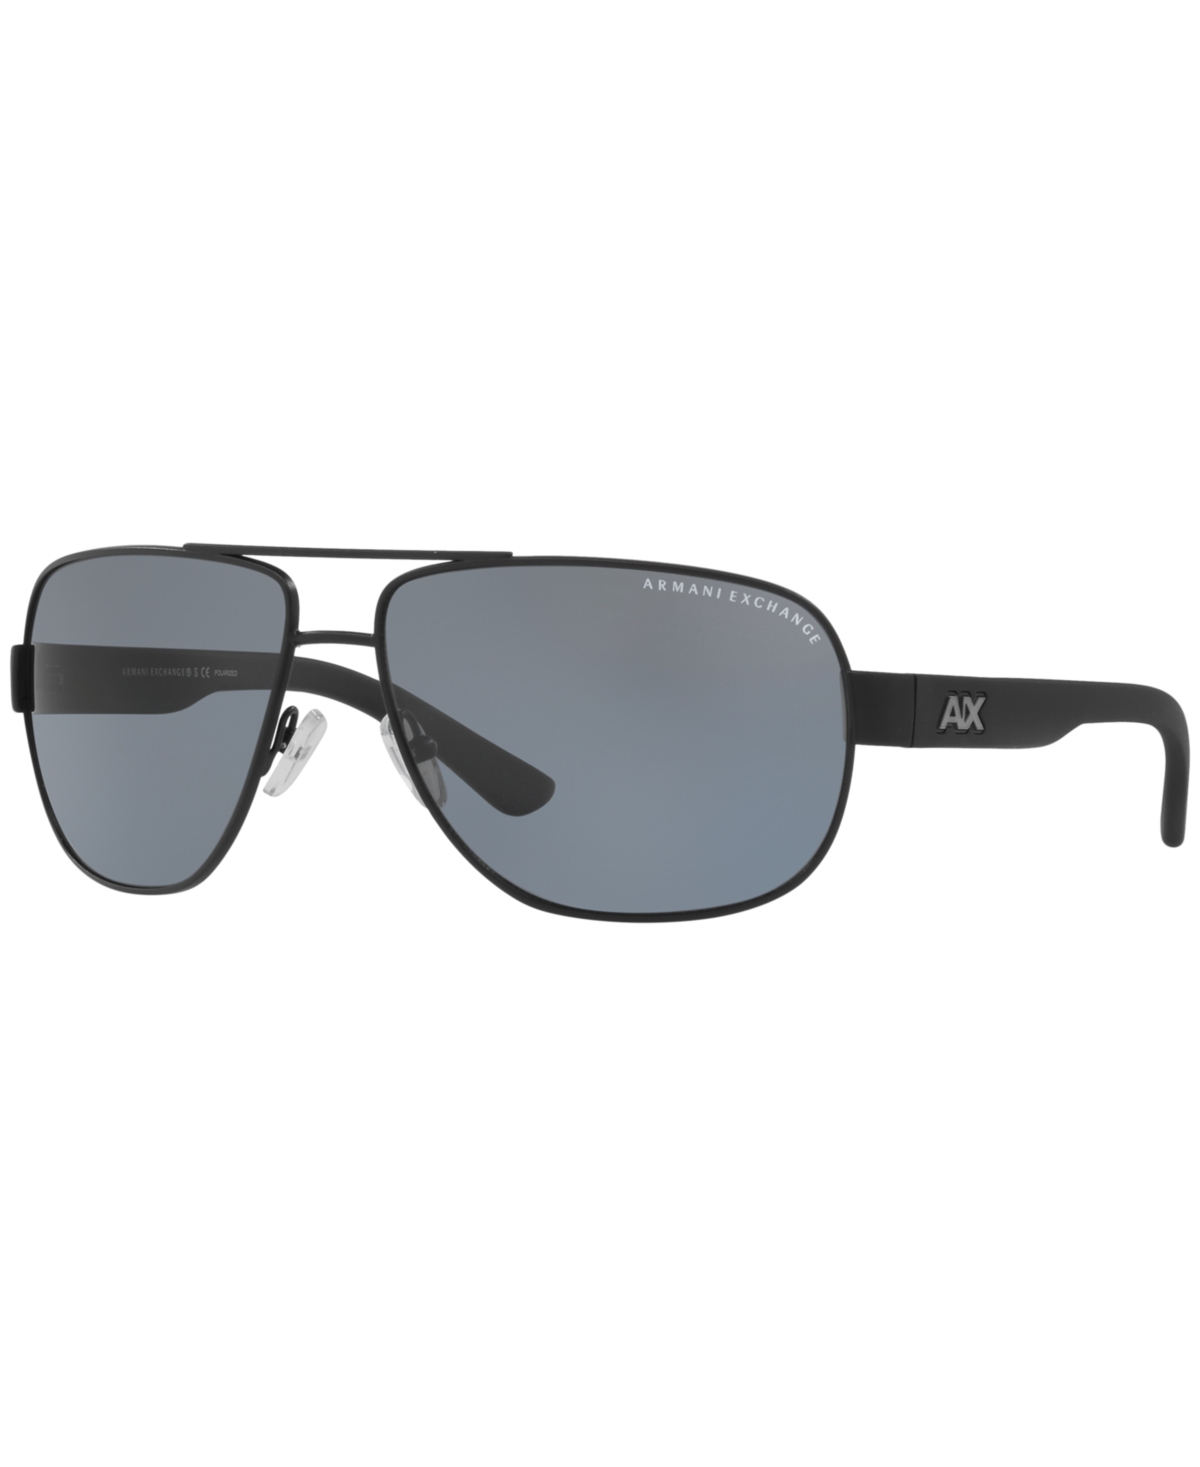 Ax Armani Exchange Armani Exchange Polarized Sunglasses , Ax2012s In Gray